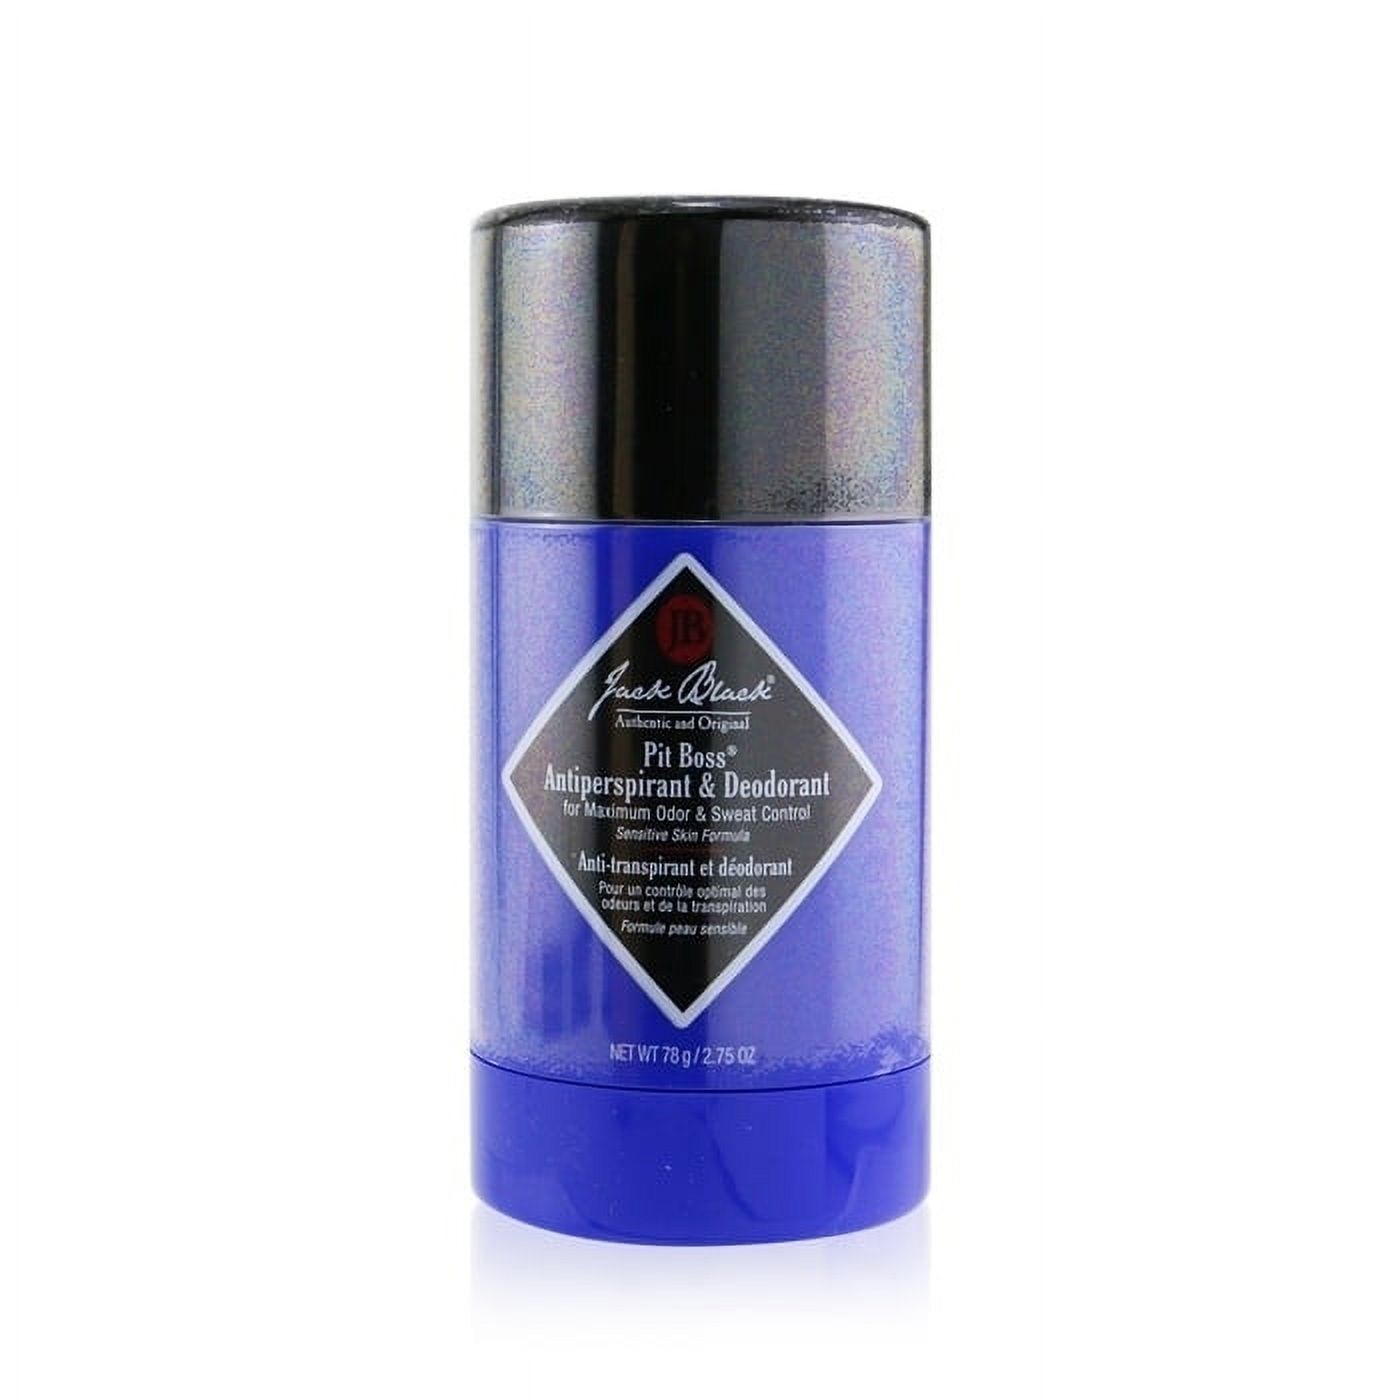 Jack Black Pit Boss Antiperspirant & Deodorant Sensitive Skin Formula 2.75oz - image 1 of 3